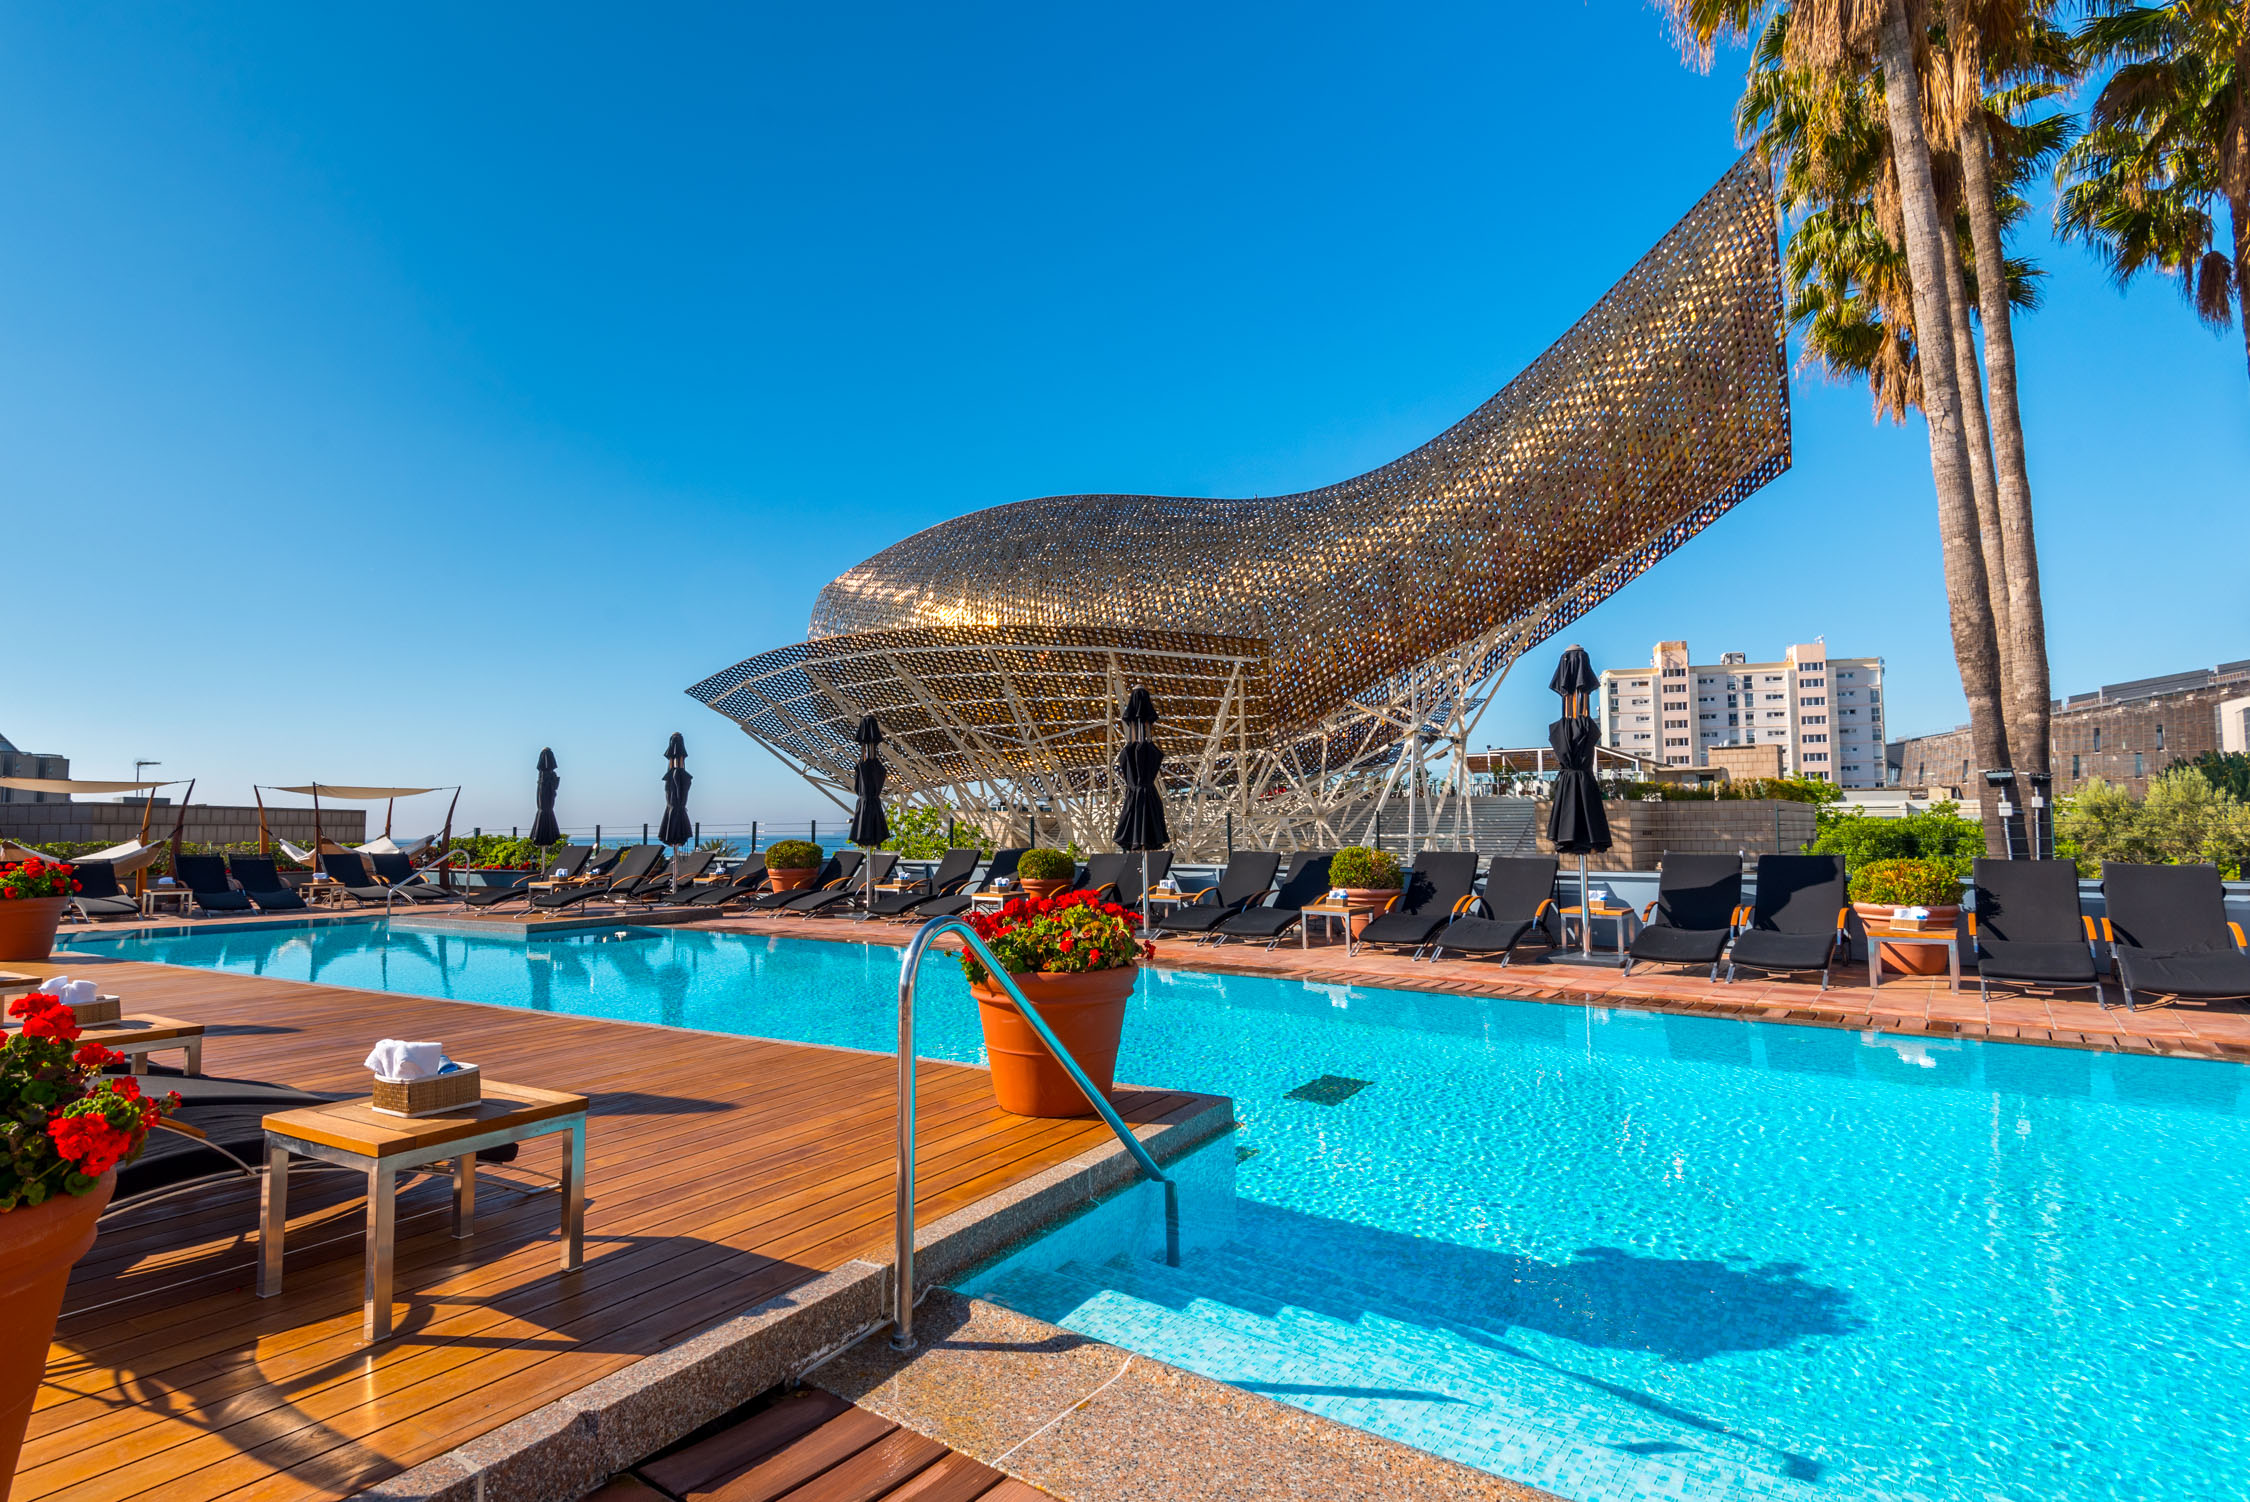 Hotel Arts, Ritz Carlton: A Luxury Barcelona Experience — No Destinations